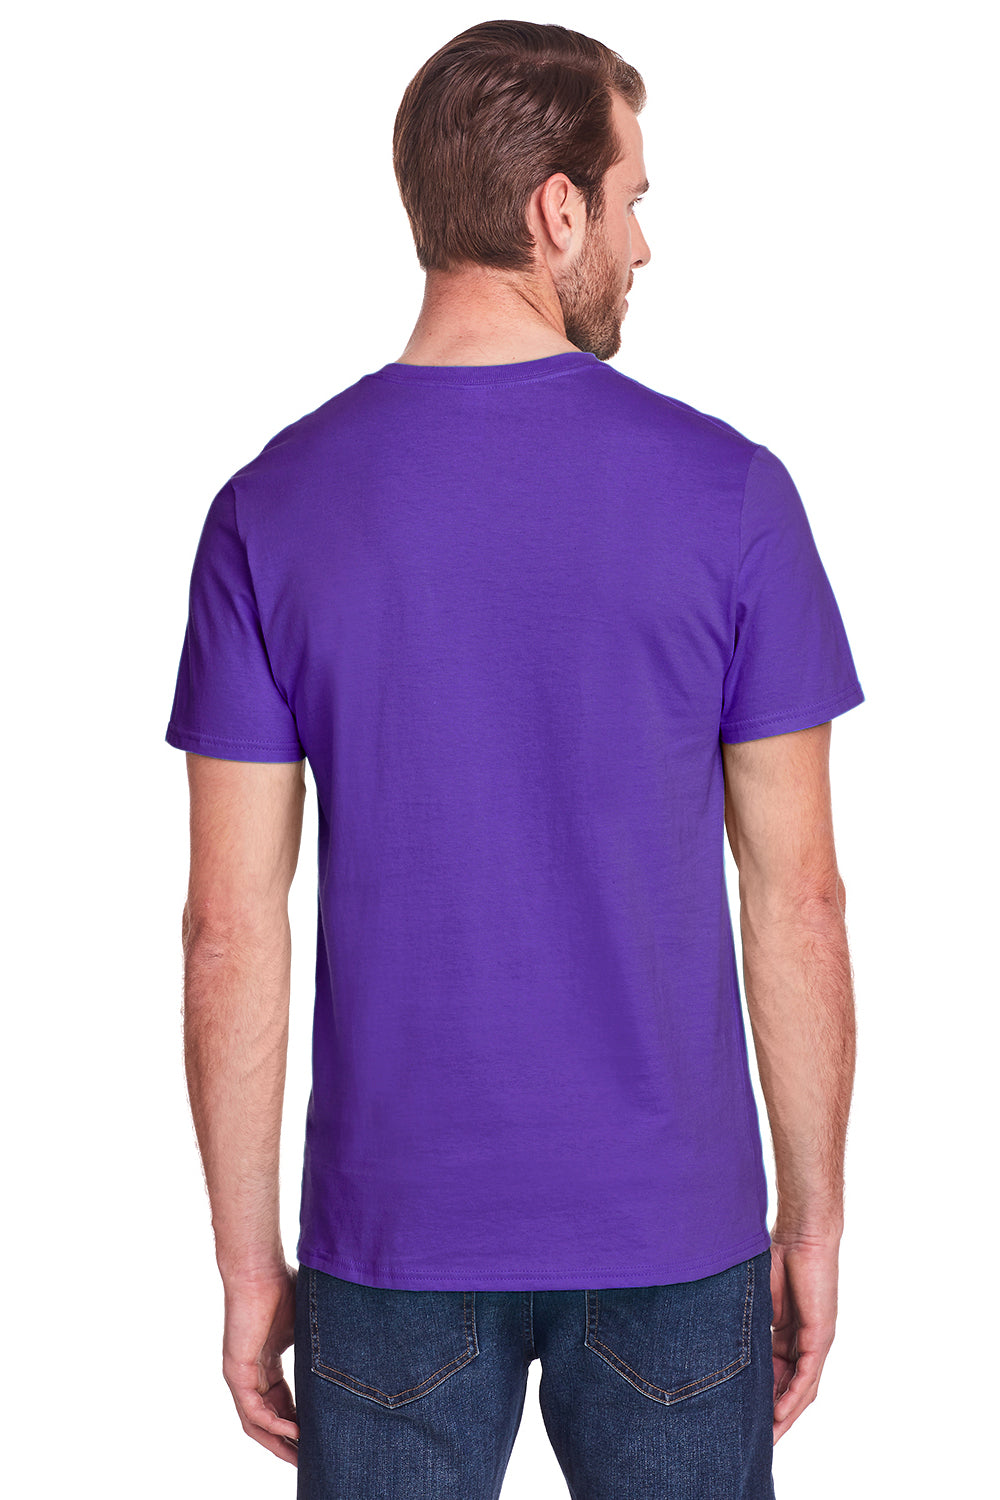 Fruit Of The Loom IC47MR Mens Iconic Short Sleeve Crewneck T-Shirt Purple Back